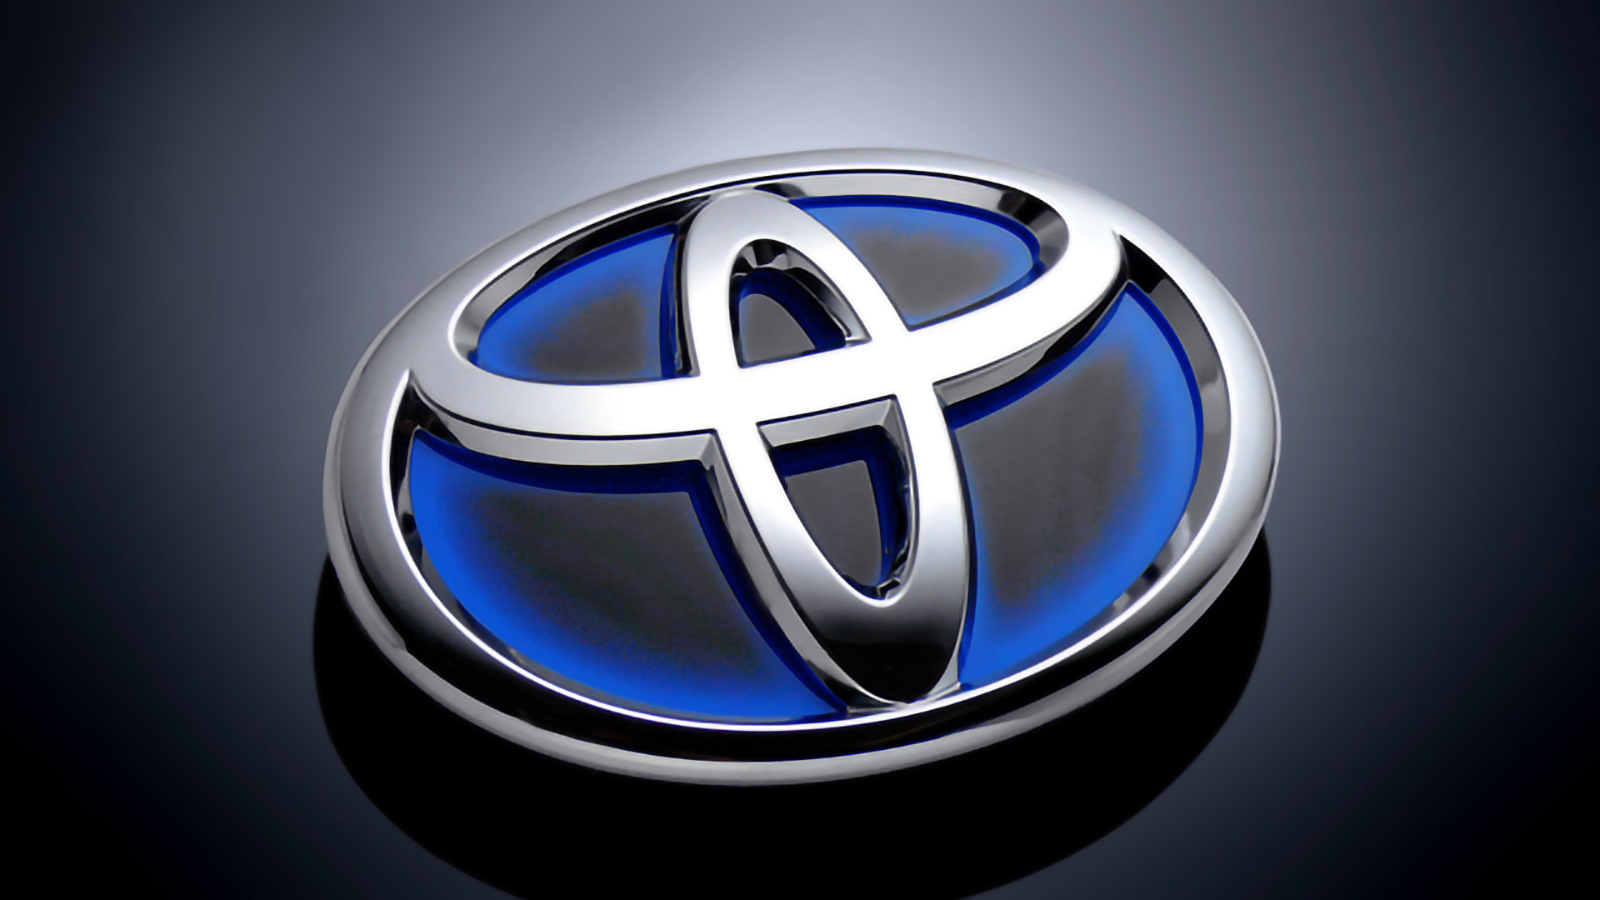 Гибрид знак. Toyota Hybrid. Значок Тойота гибрид. Toyota Hybrid Emblem. Значок Toyota Hybrid.